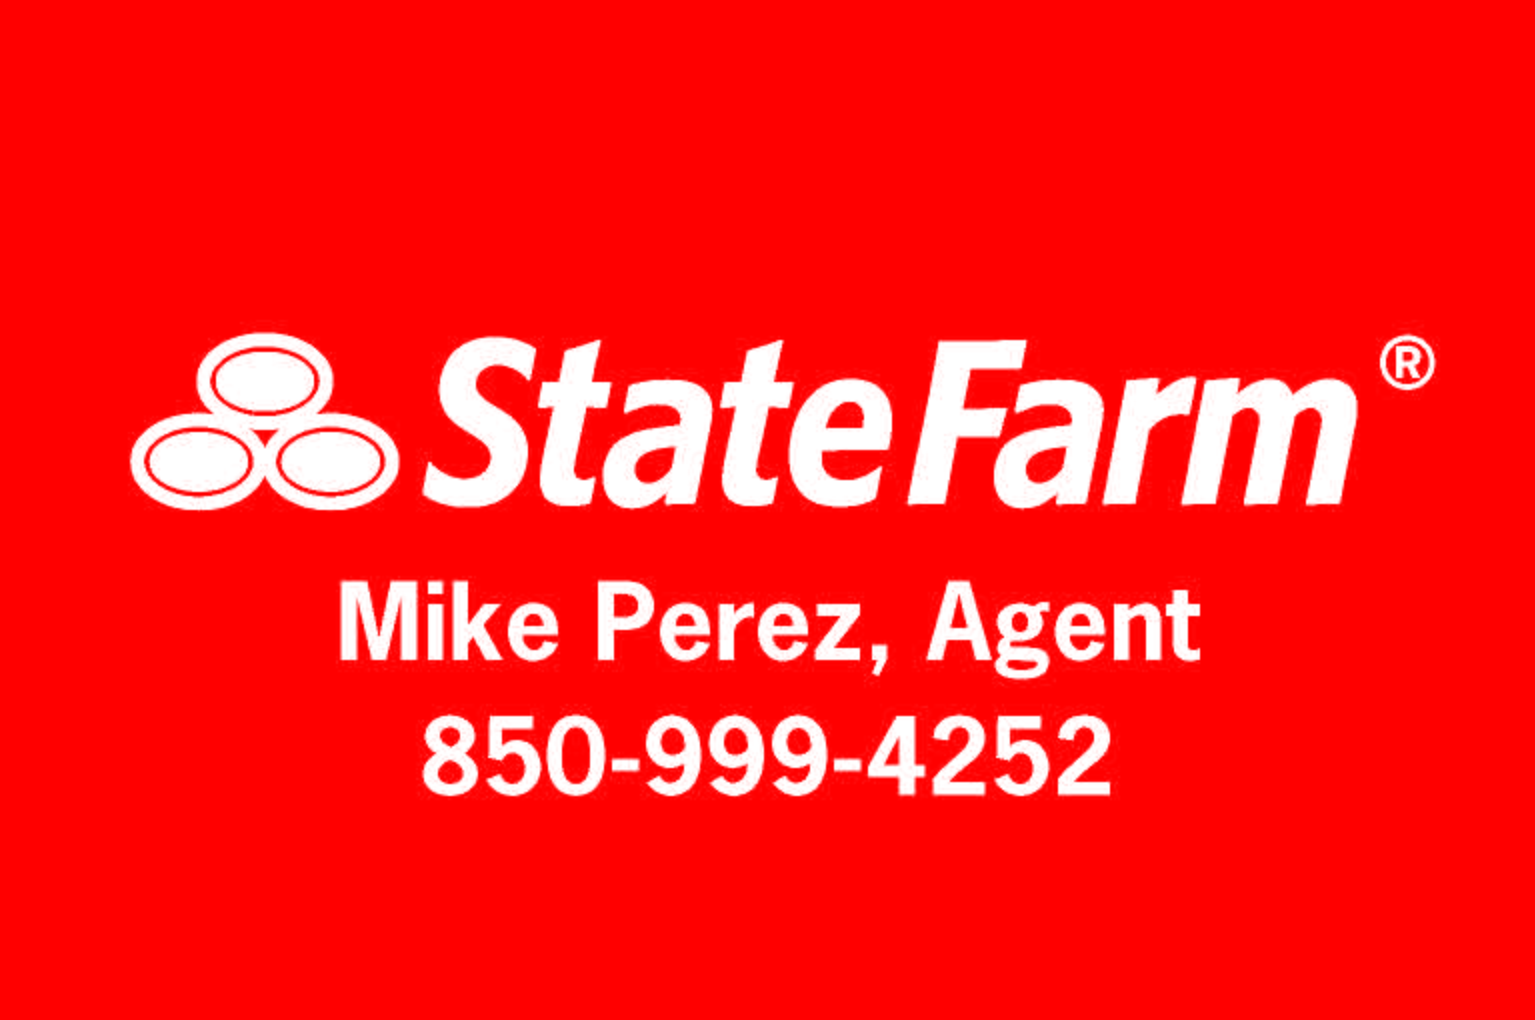 Mike Perez State Farm Logo.jpg